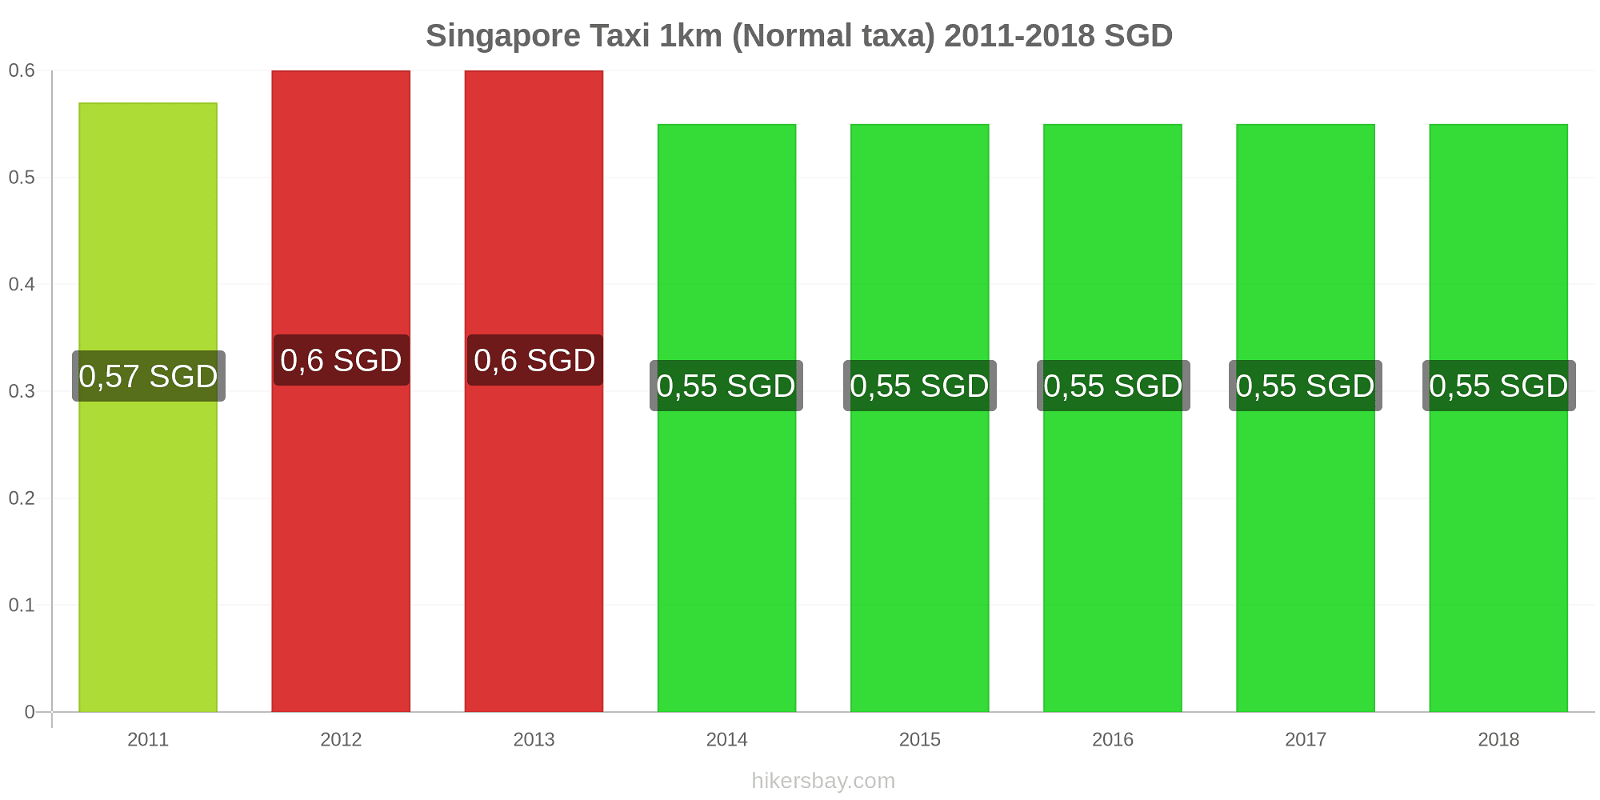 Singapore prisändringar Taxi 1km (Normal taxa) hikersbay.com